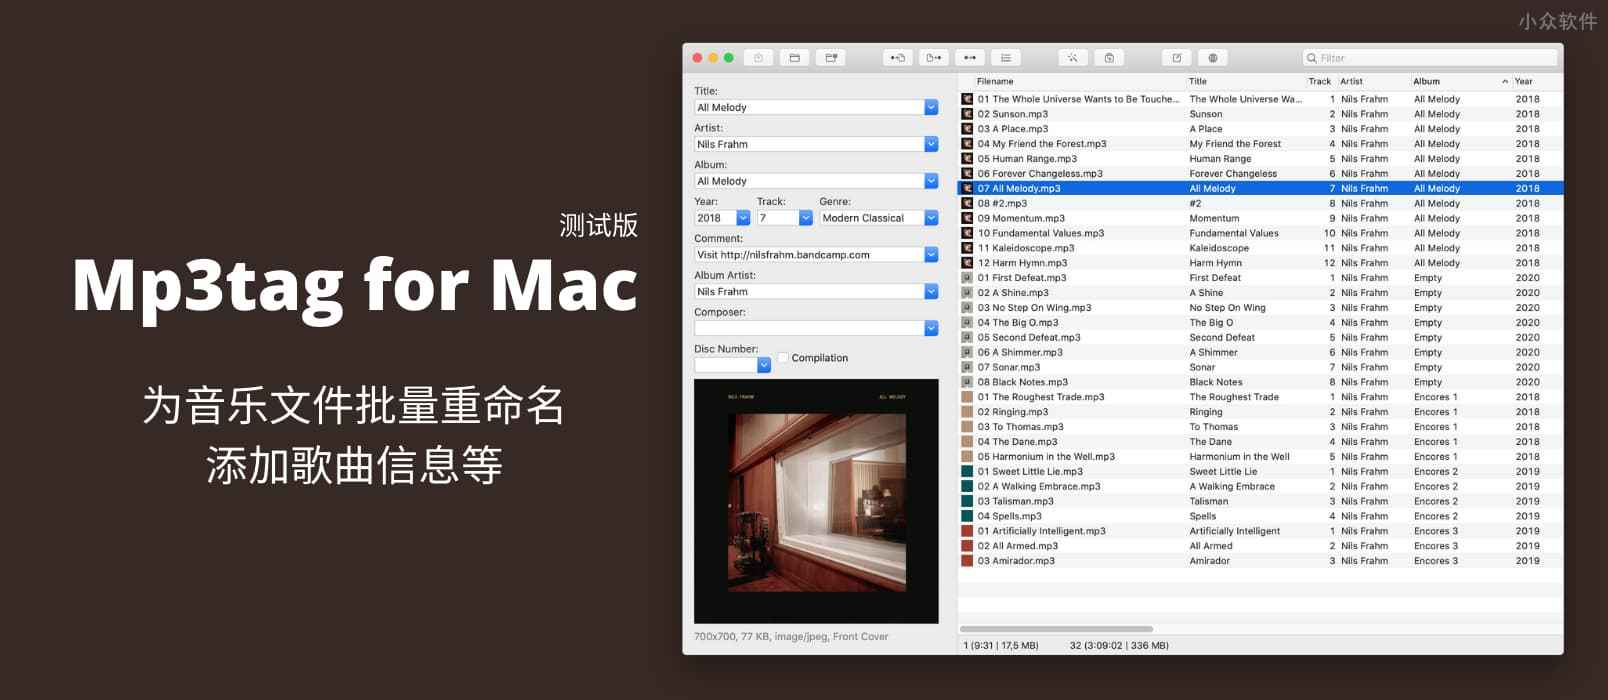 Mp3tag for Mac 测试版发布，为 mp3 文件批量重命名、添加歌曲信息等